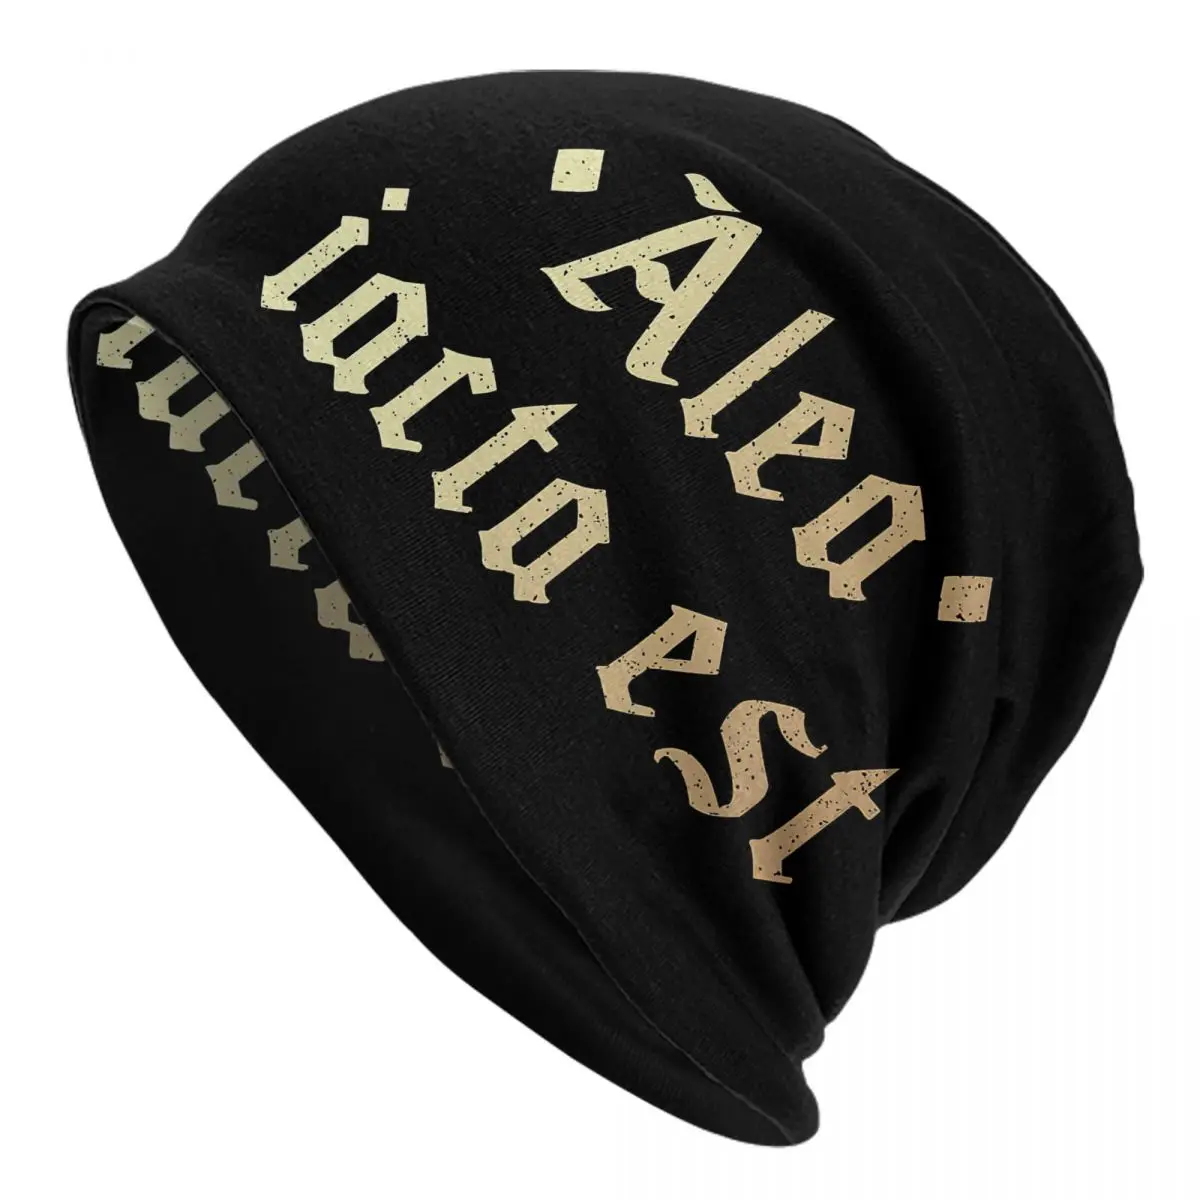 Ancient Rome - Alea Iacta Est 4 Adult Men's Women's Knit Hat Keep warm winter knitted hat